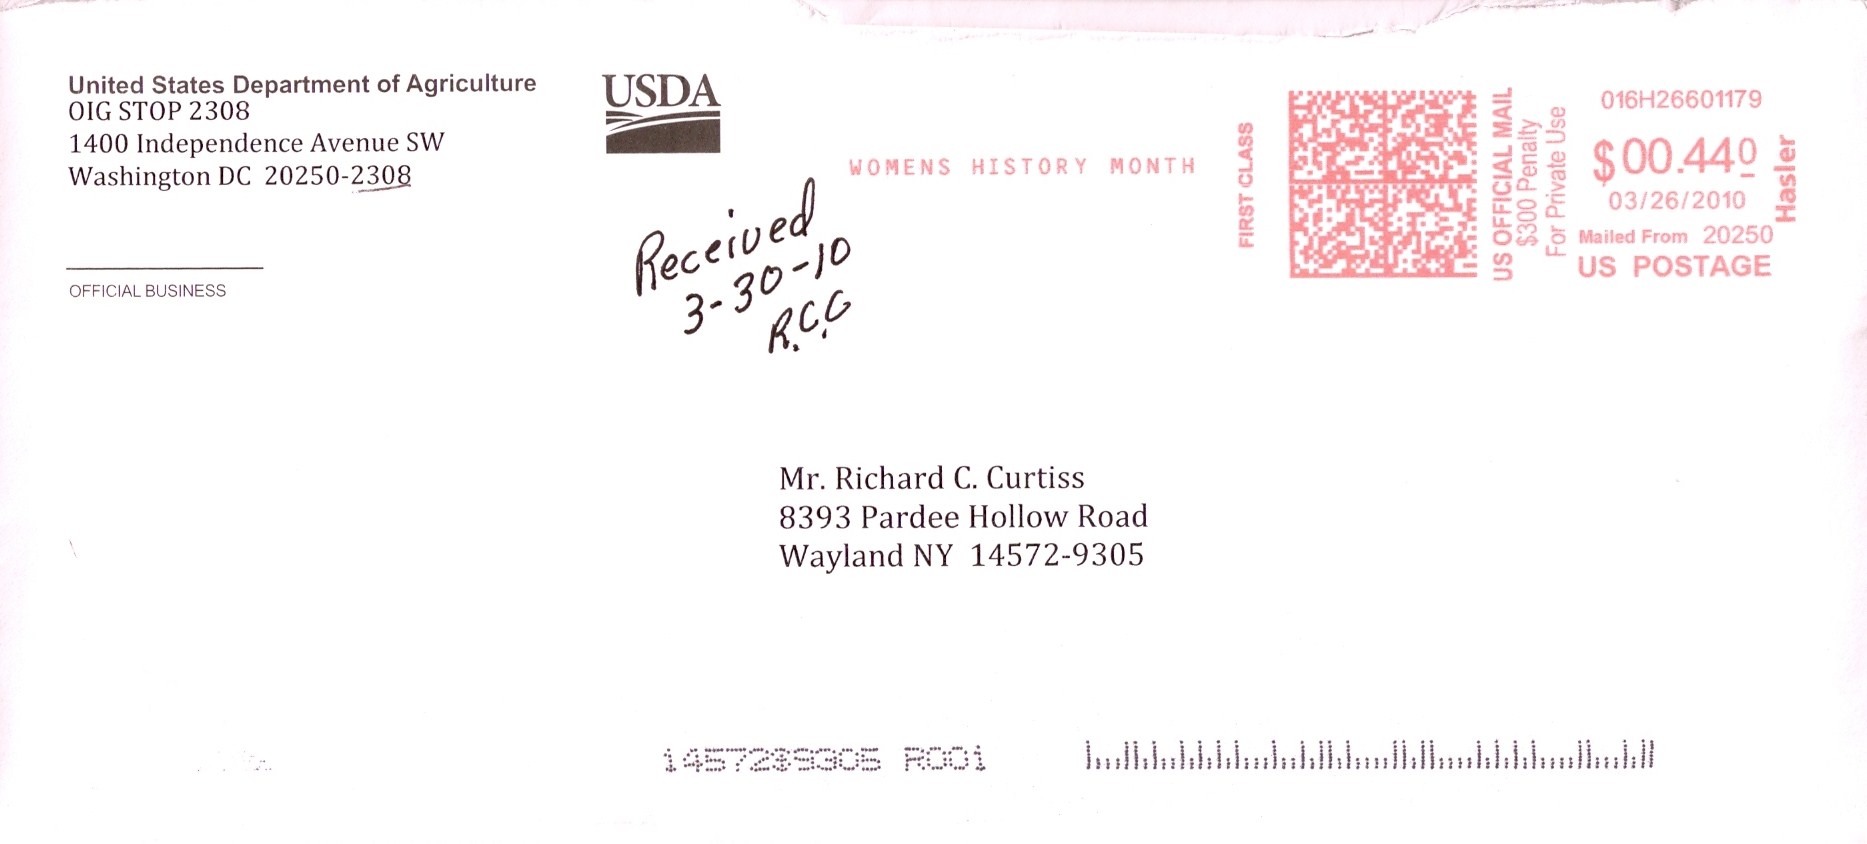 USDA letter